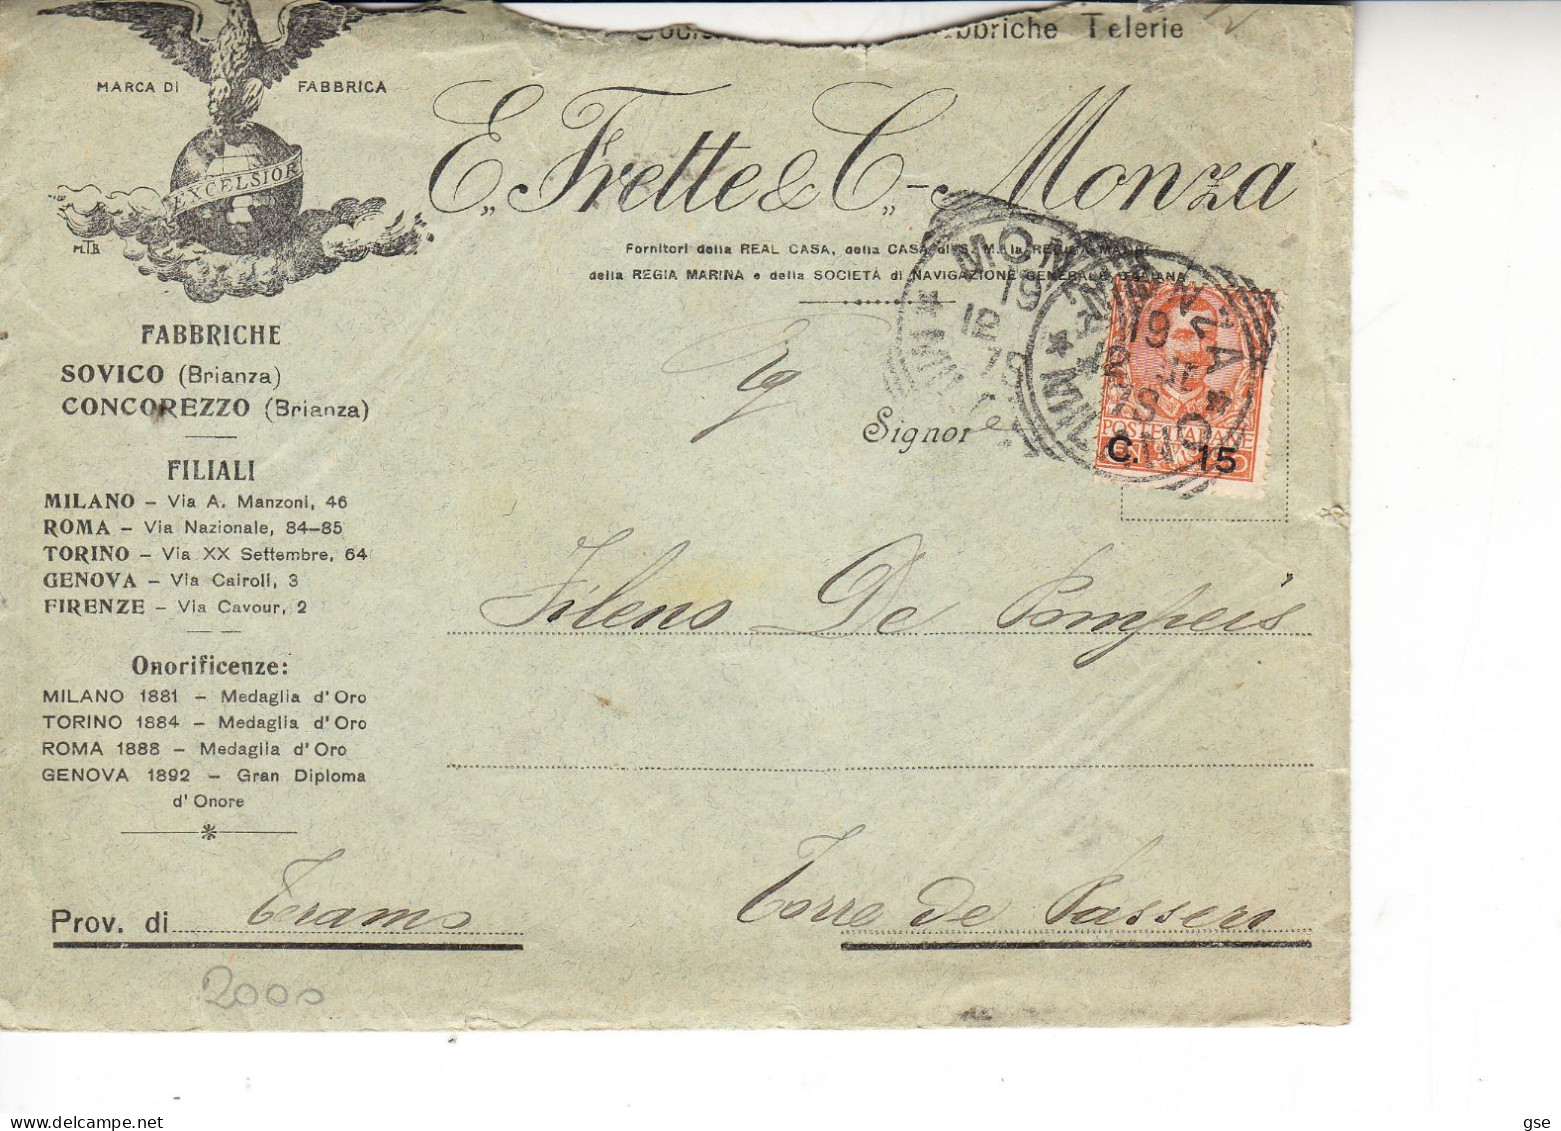 ITALIA 1902 - E. FRETTE  E C. - Monza - Publicité